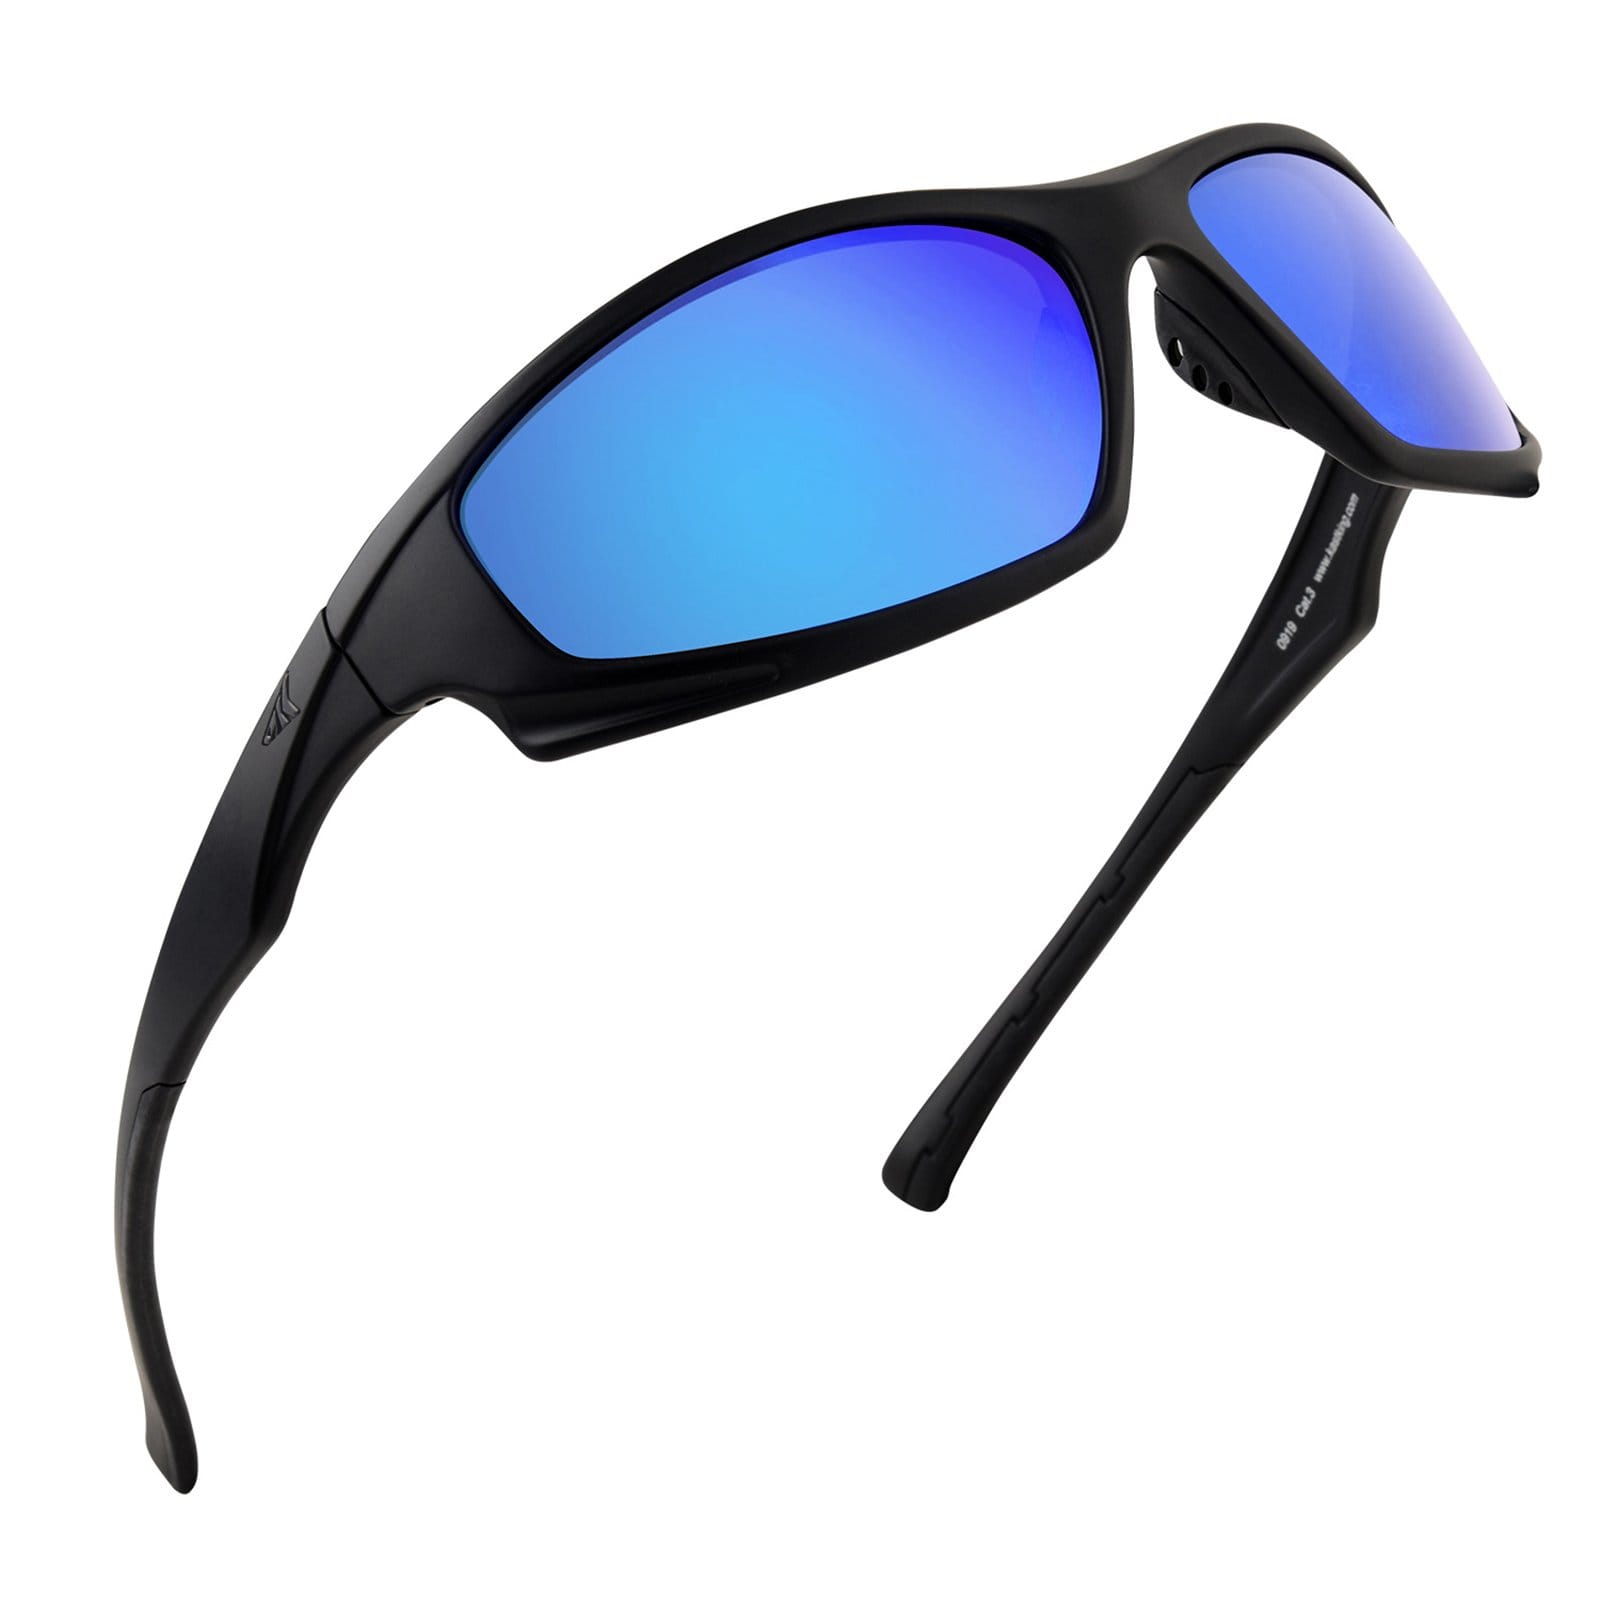 KastKing Seneca Polarized Sport Sunglasses